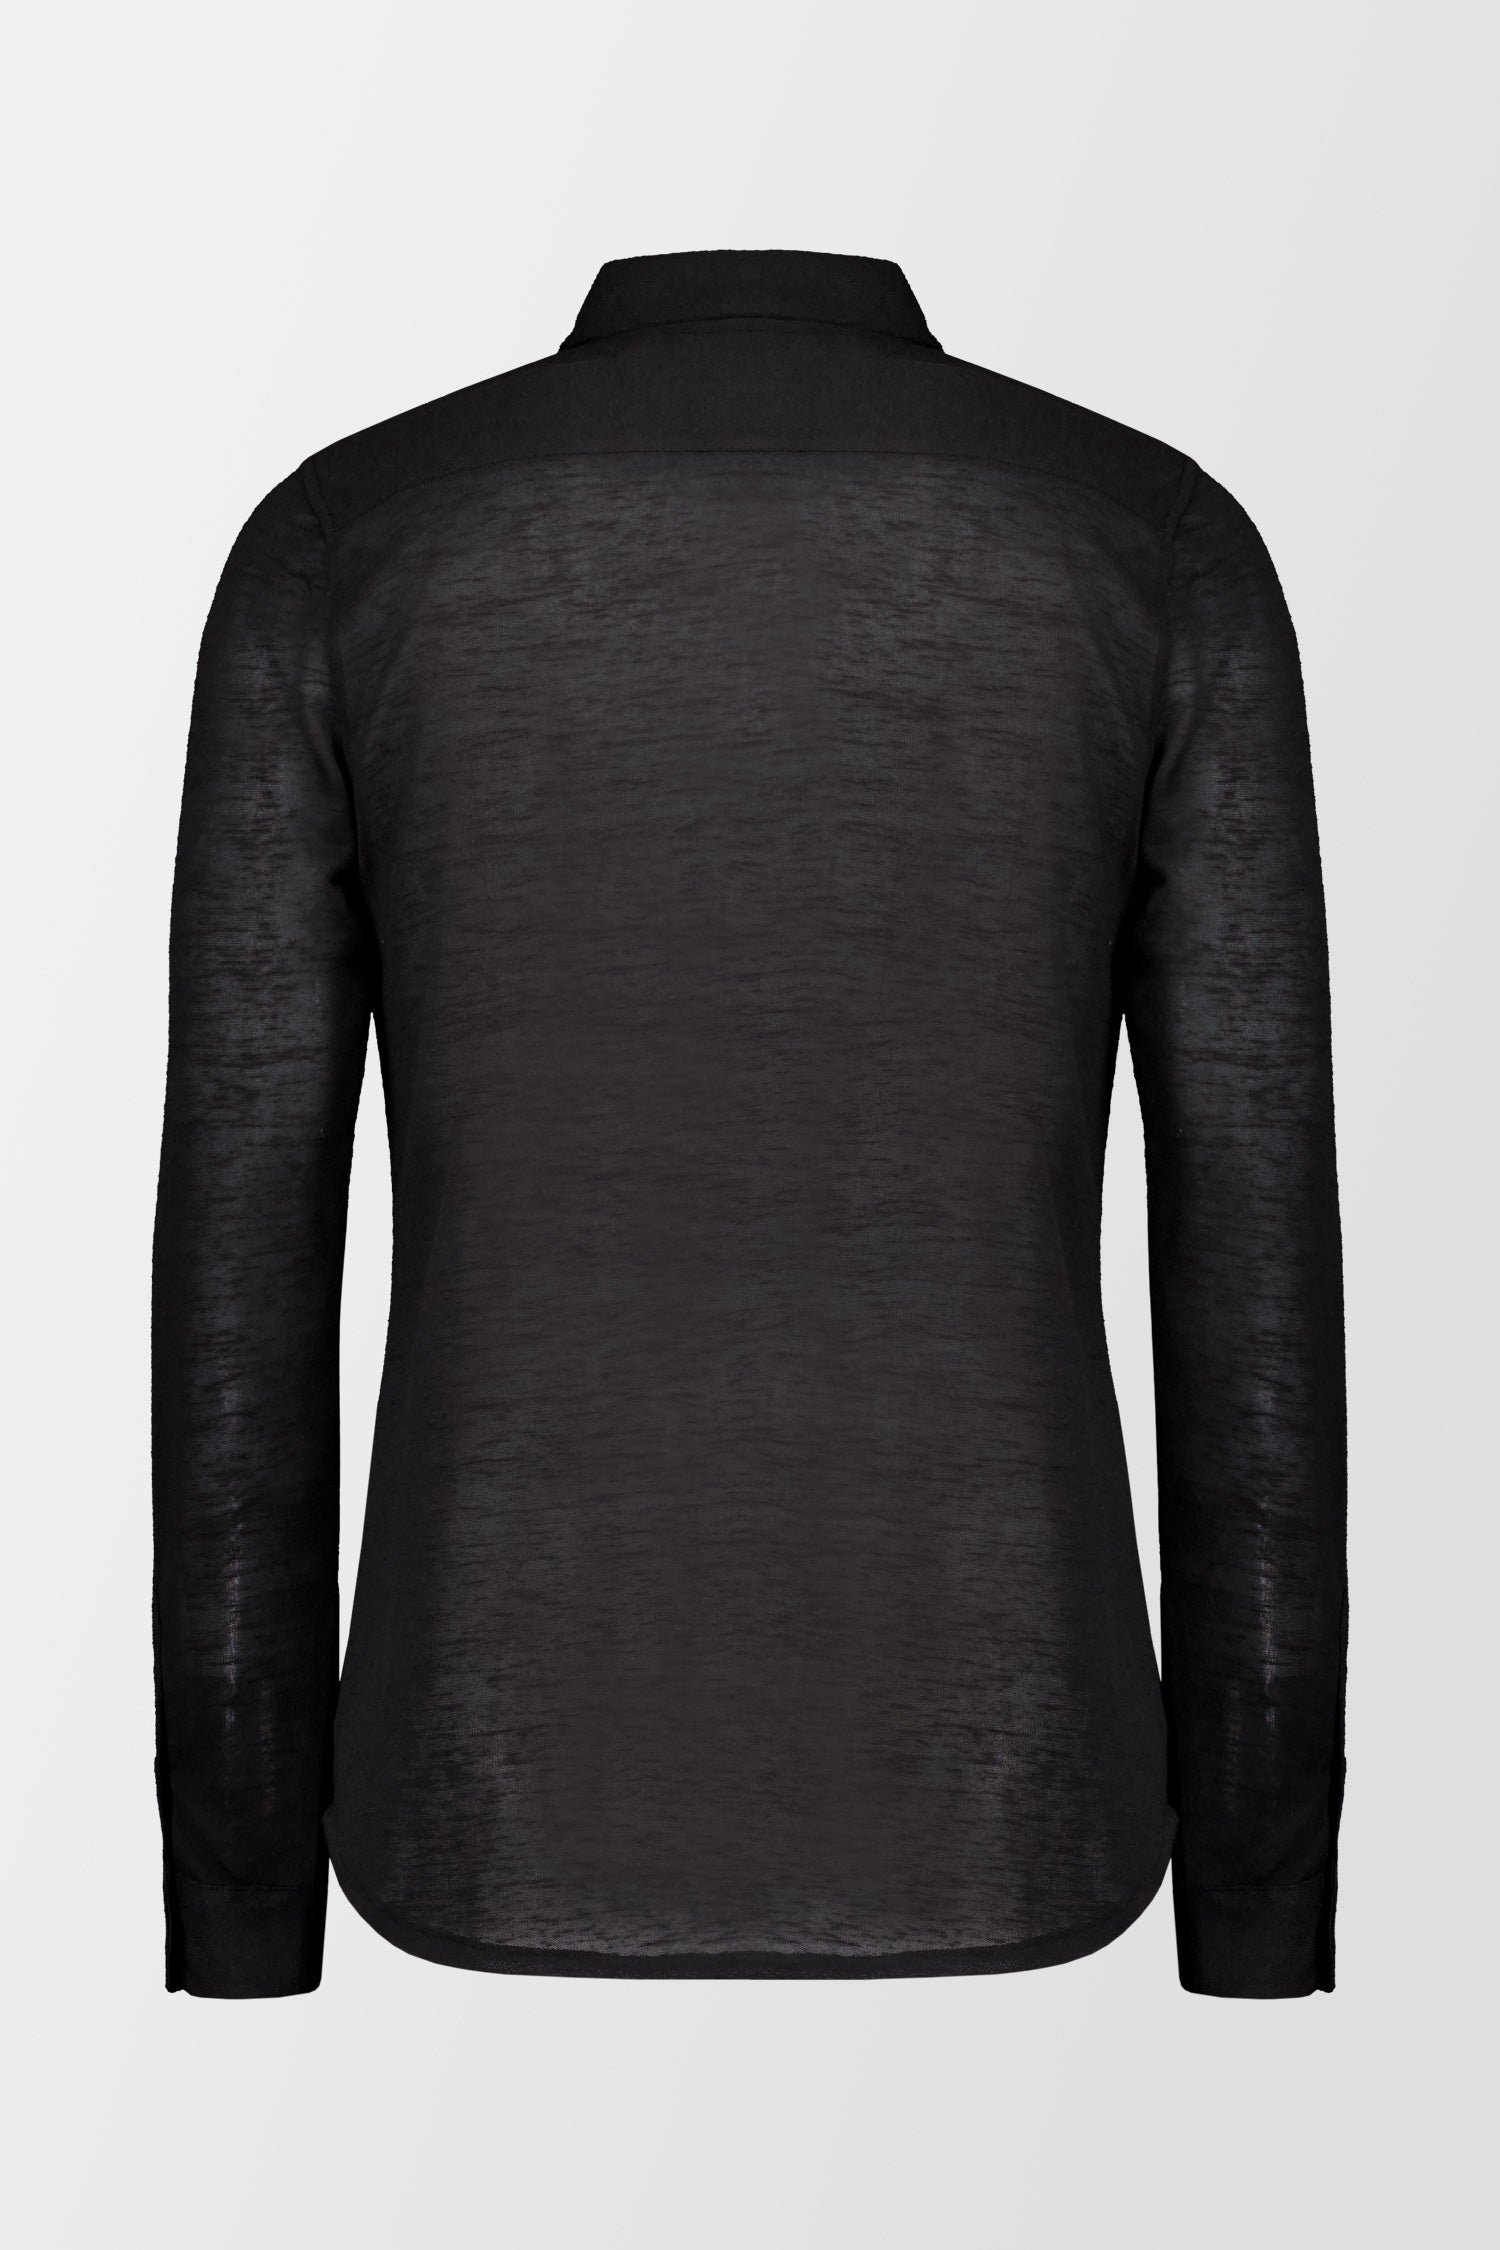 Bain de Mer Black Byblos Linen Shirt